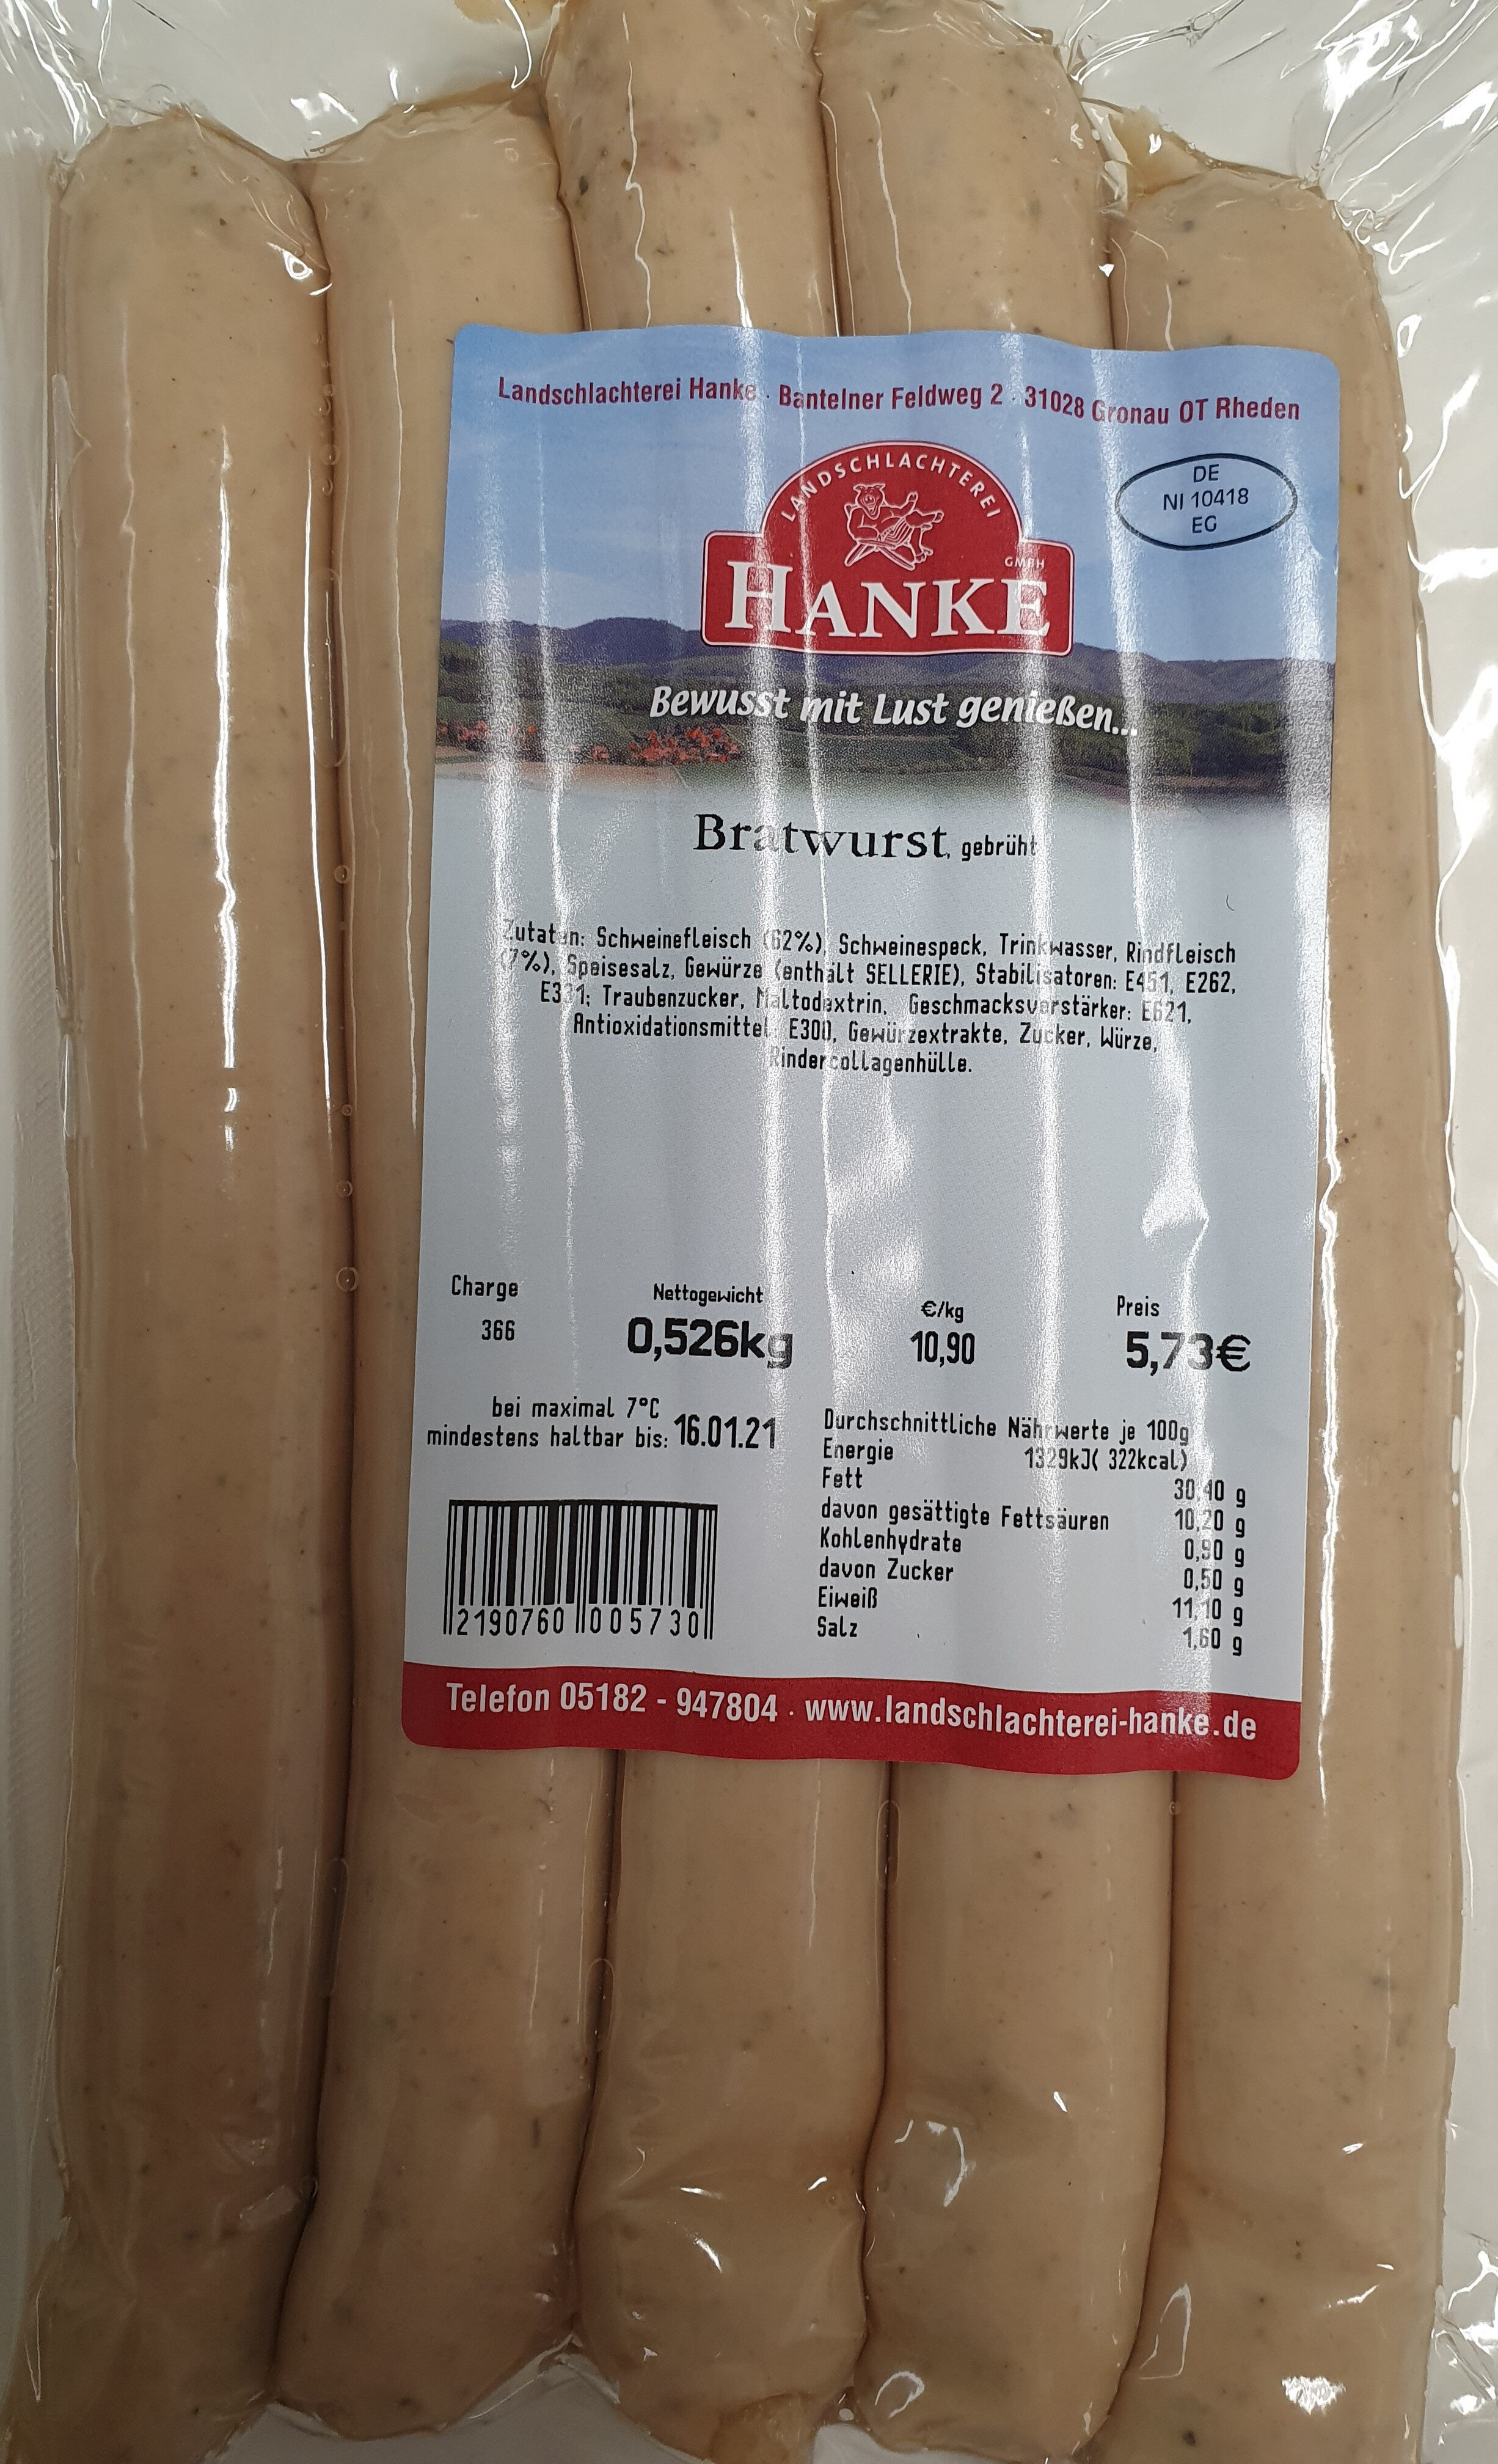 Bratwurst gebrüht Hanke - Product - de